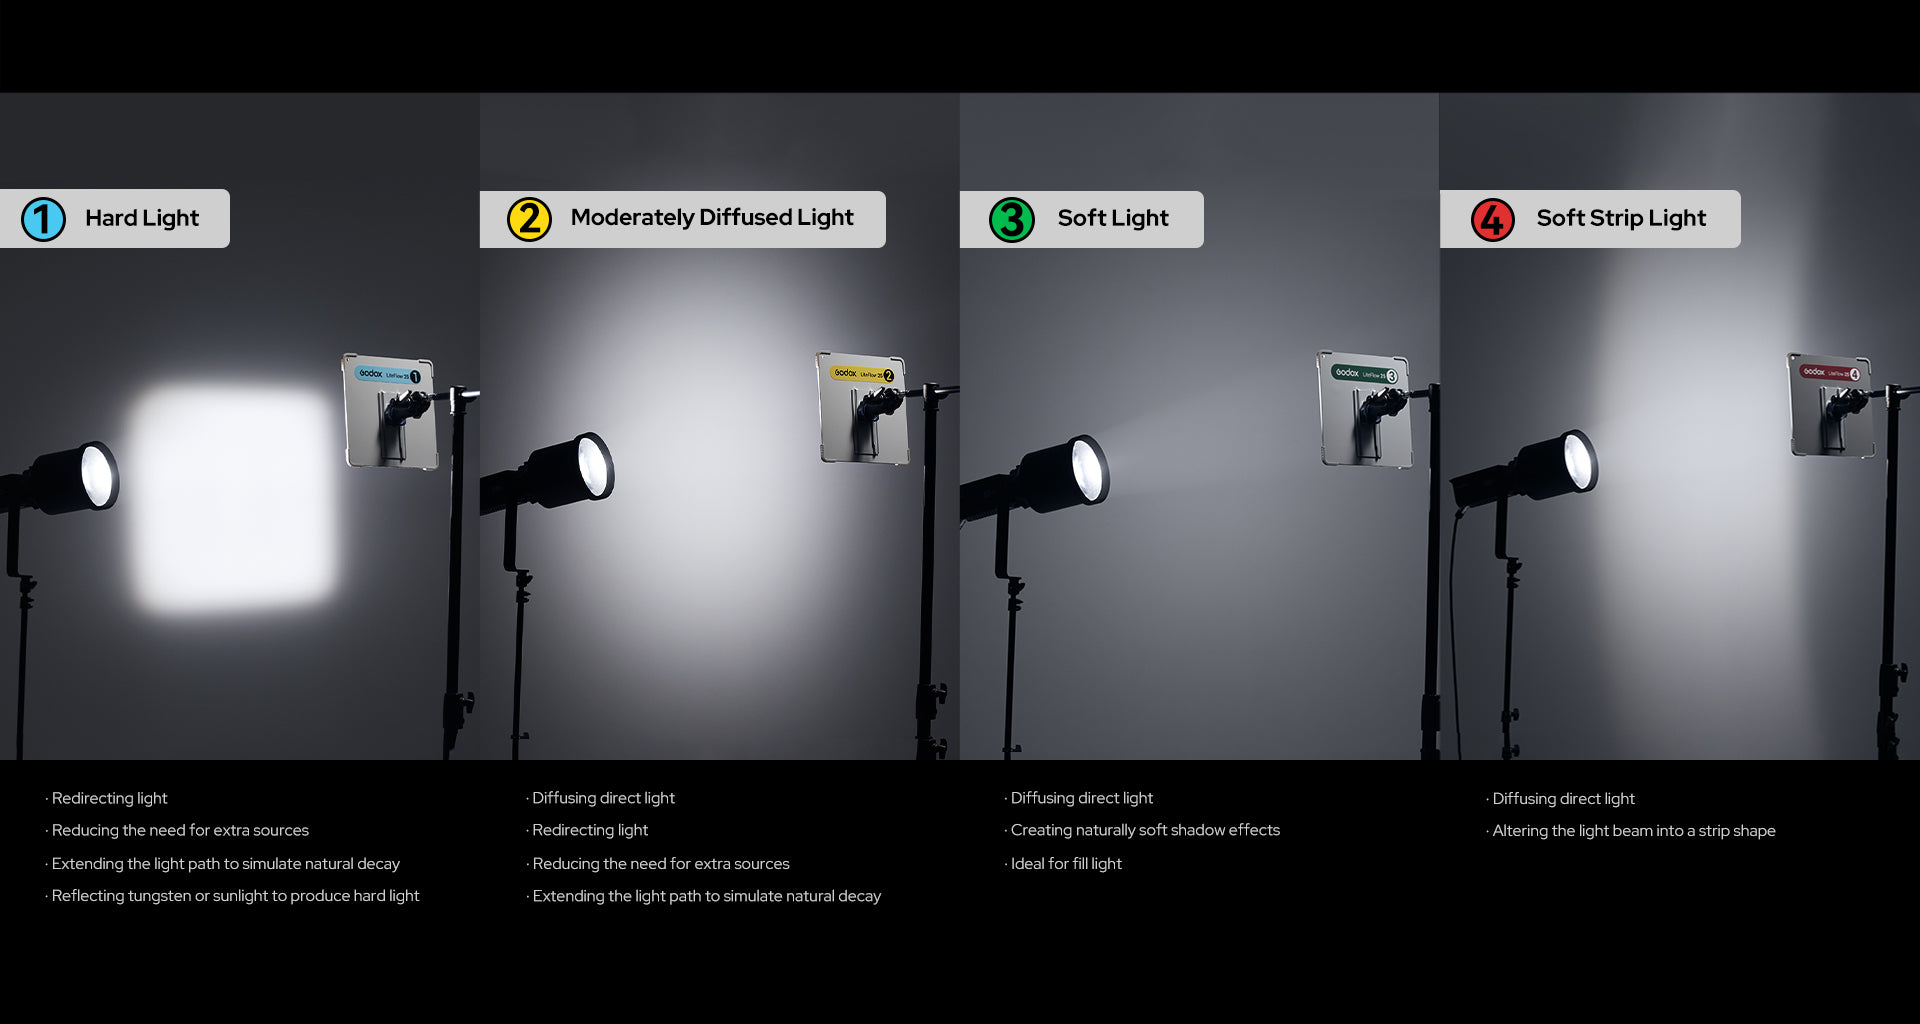 GODOX KNOWLED Cine Lighting Reflector LiteFlow 50 Reflector Kit